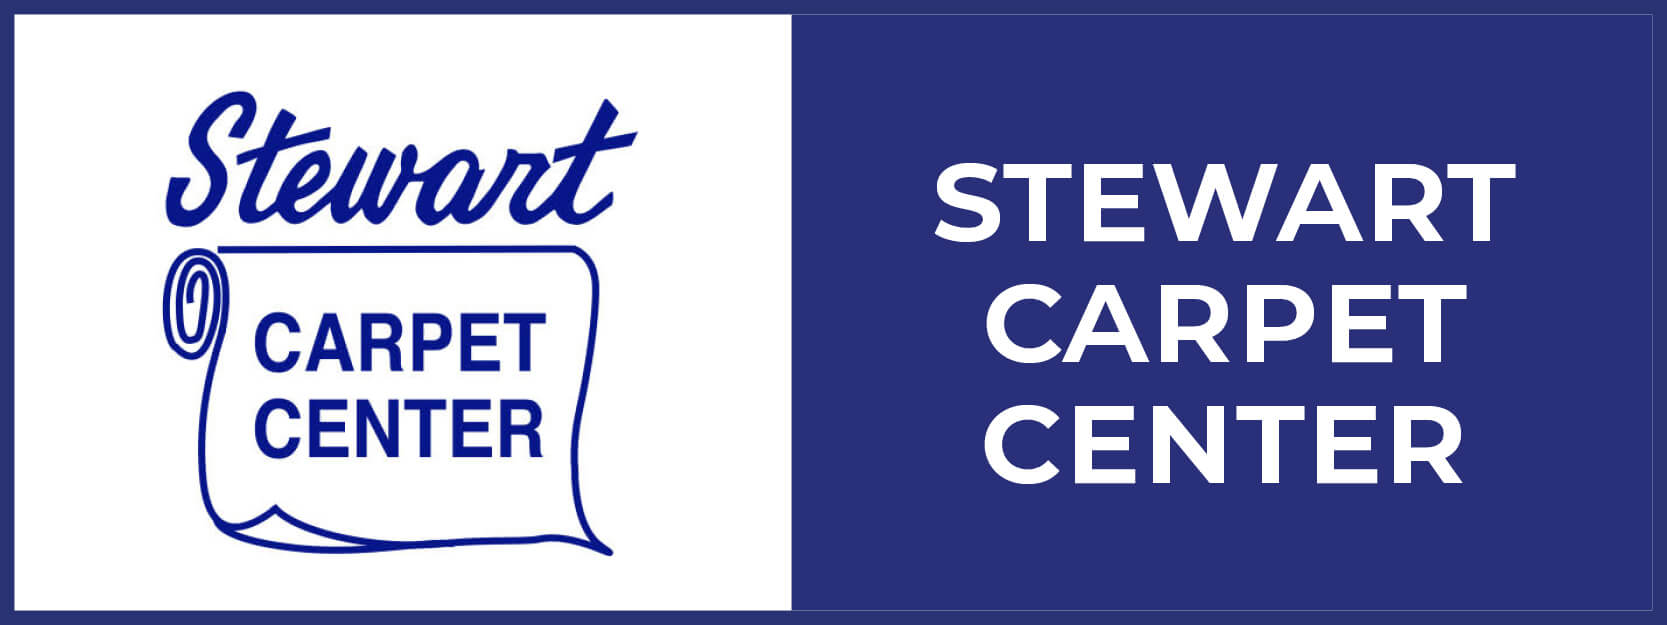 Stewart Carpet Center button